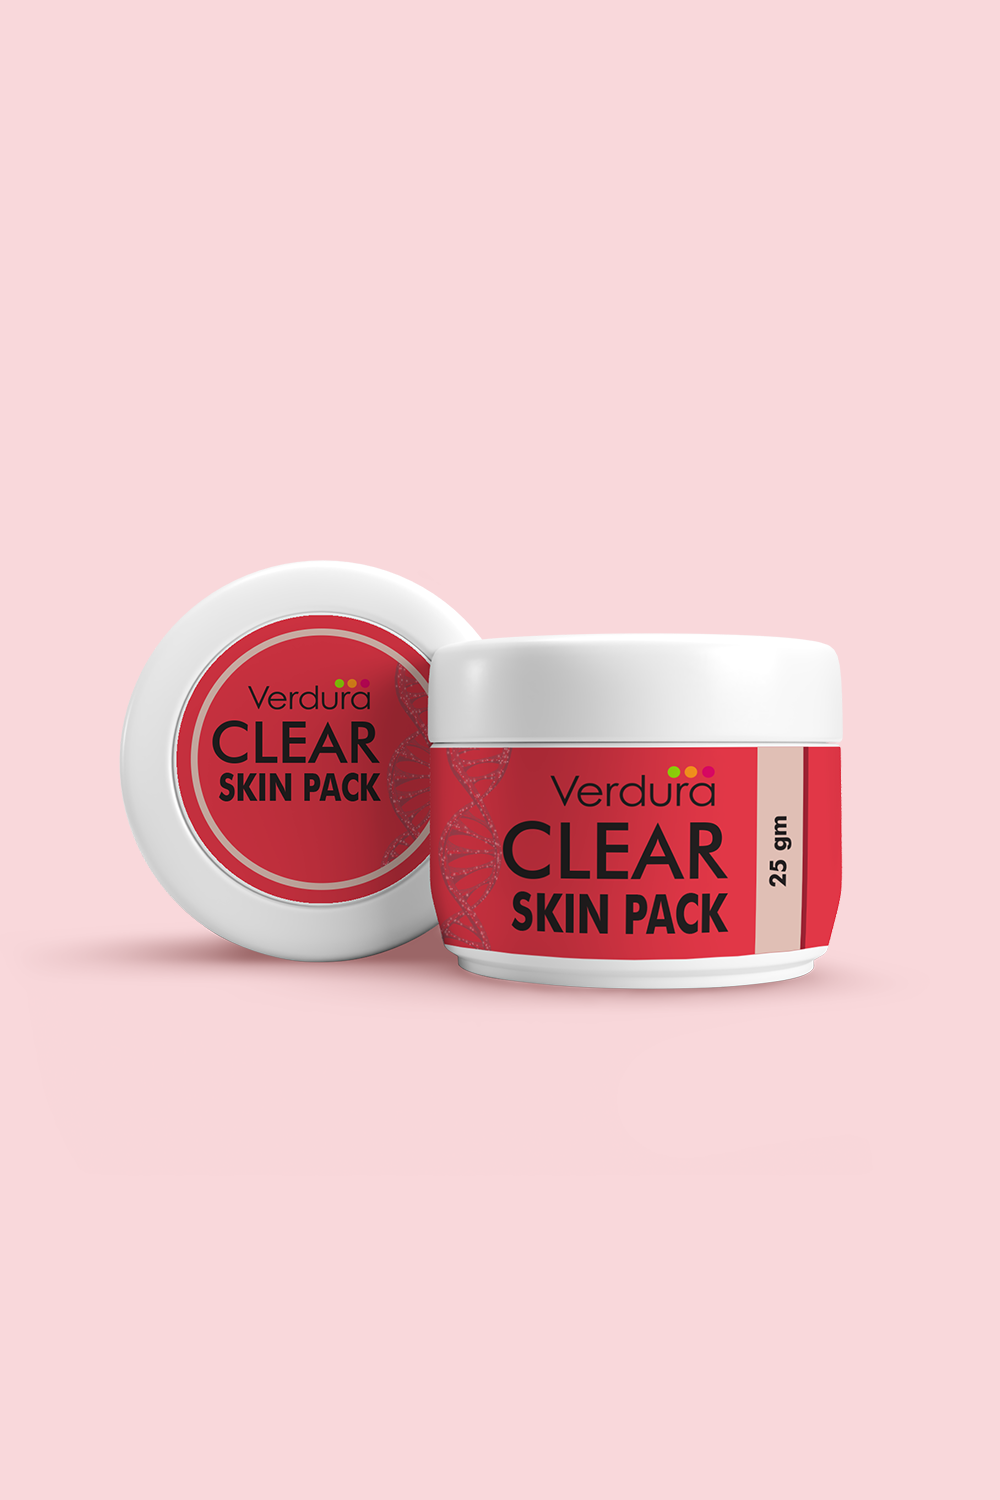 Verdura clear skin pack